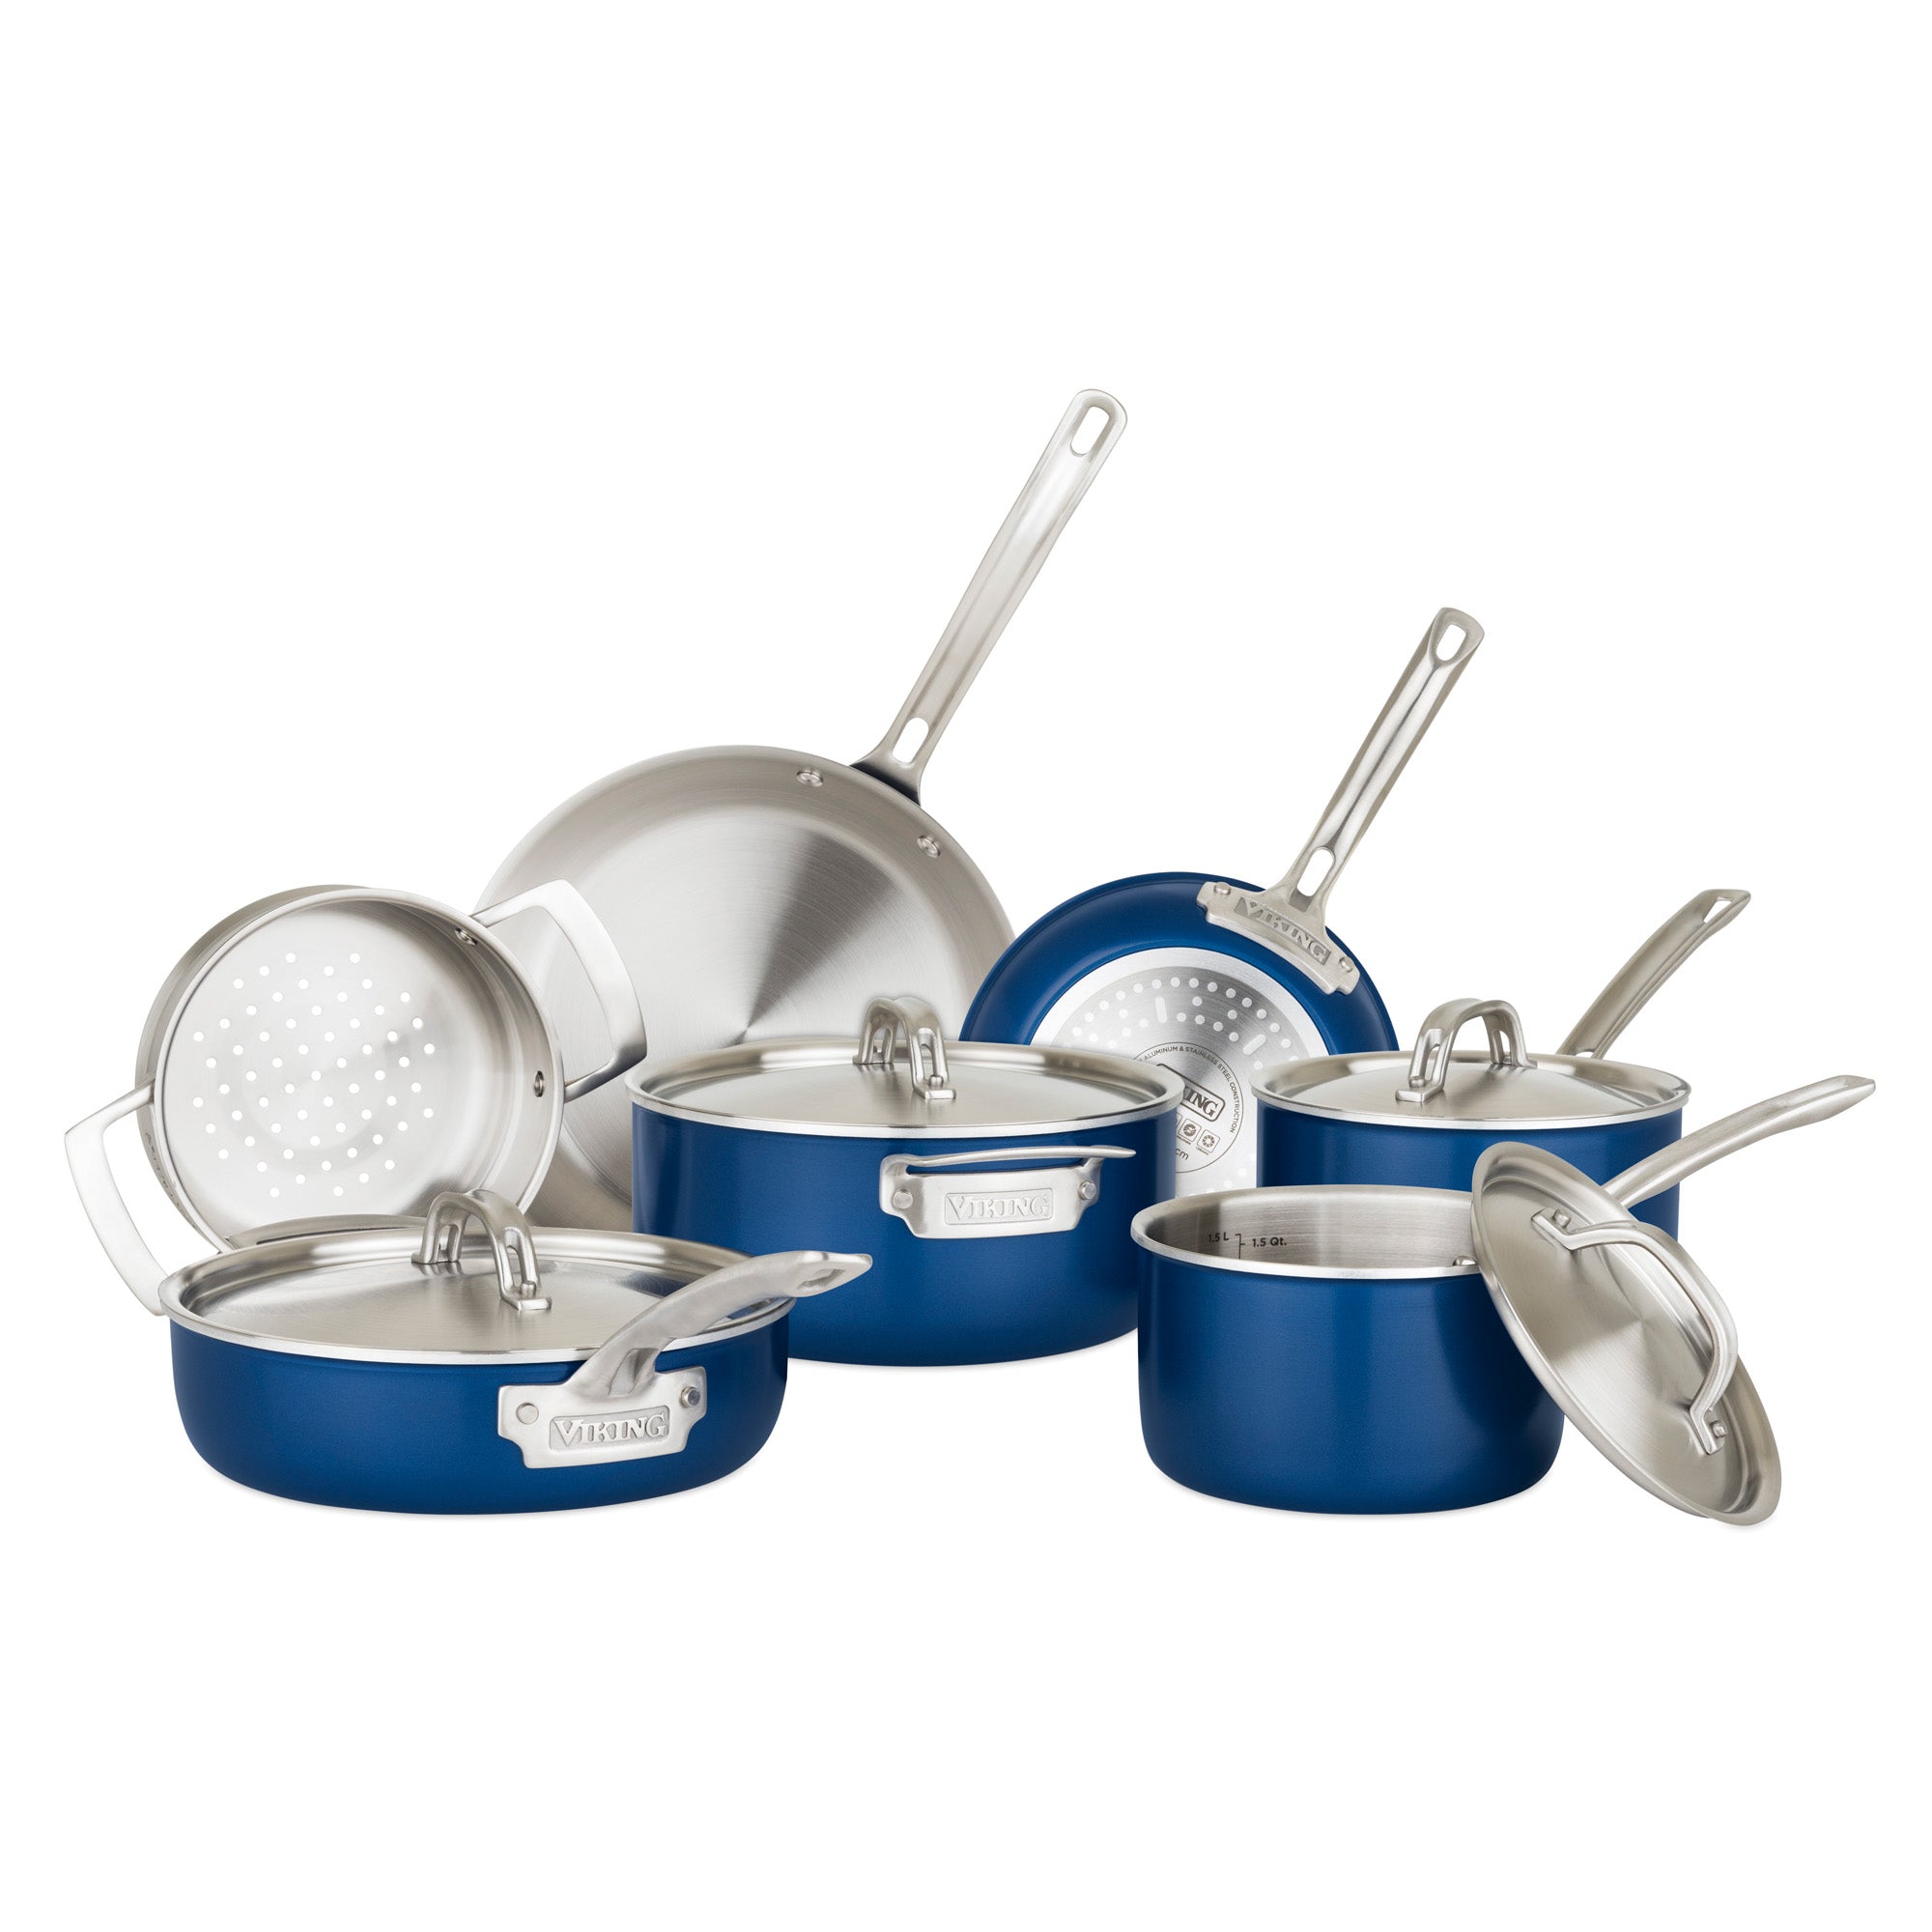 Alsasa® Non-stick Frying Pan Set with Lids